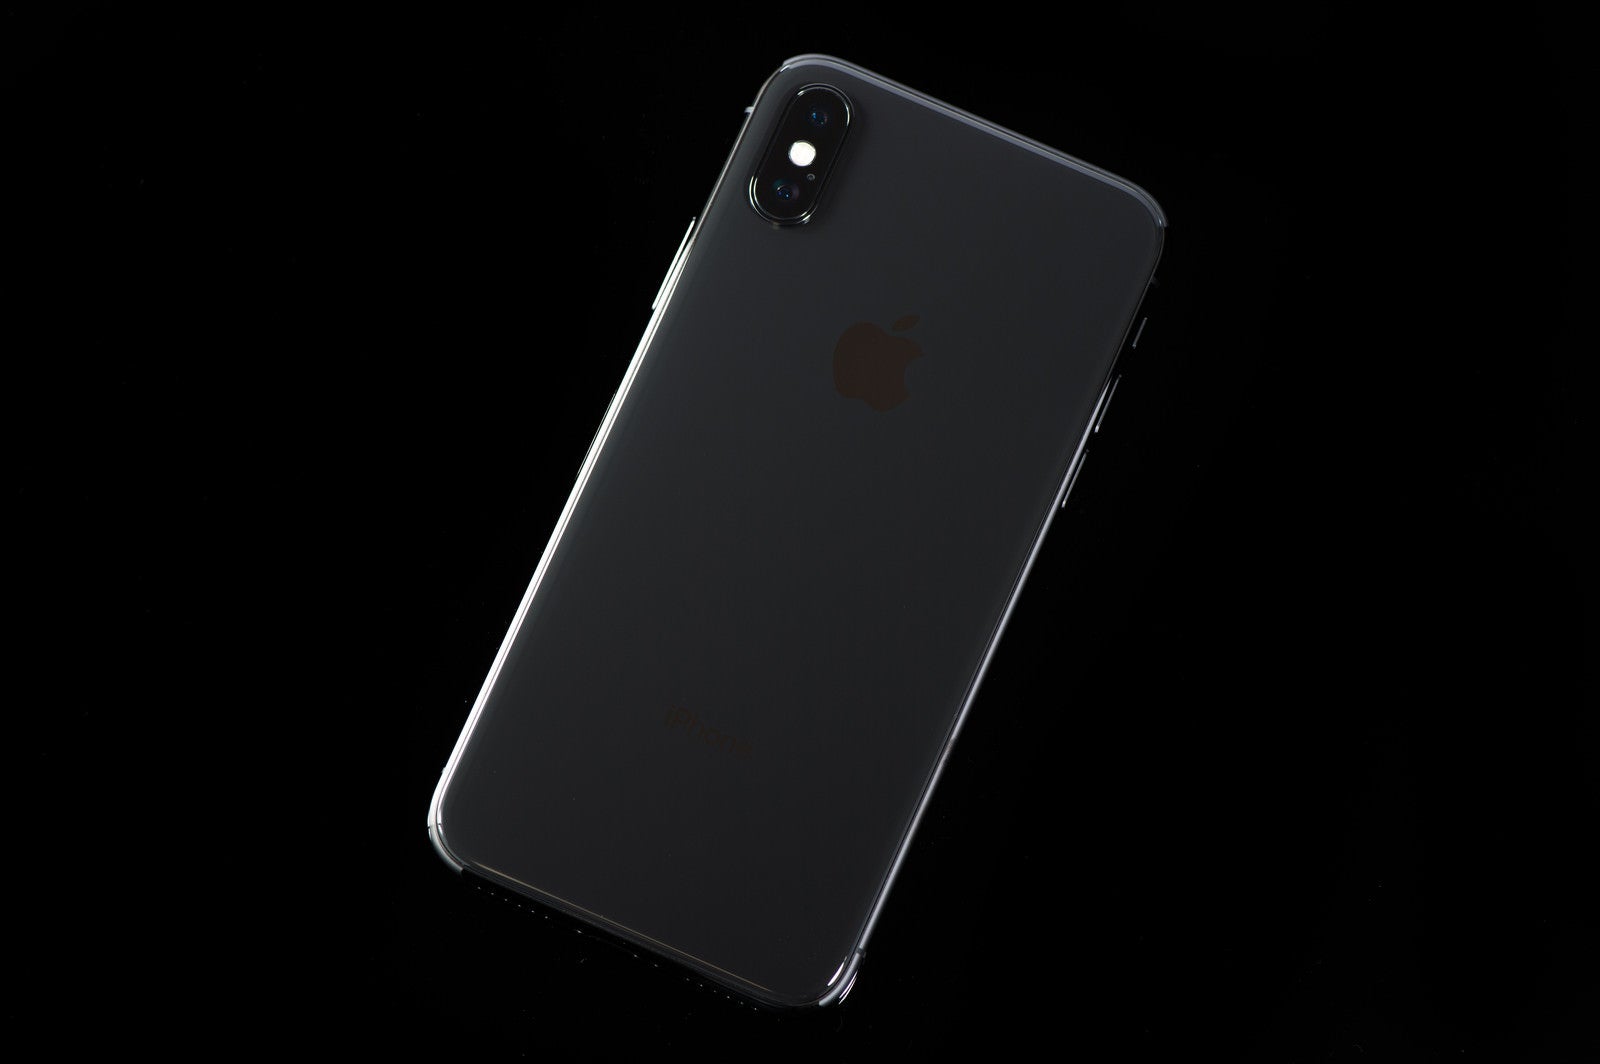 「iPhone X ブラックの背面」の写真